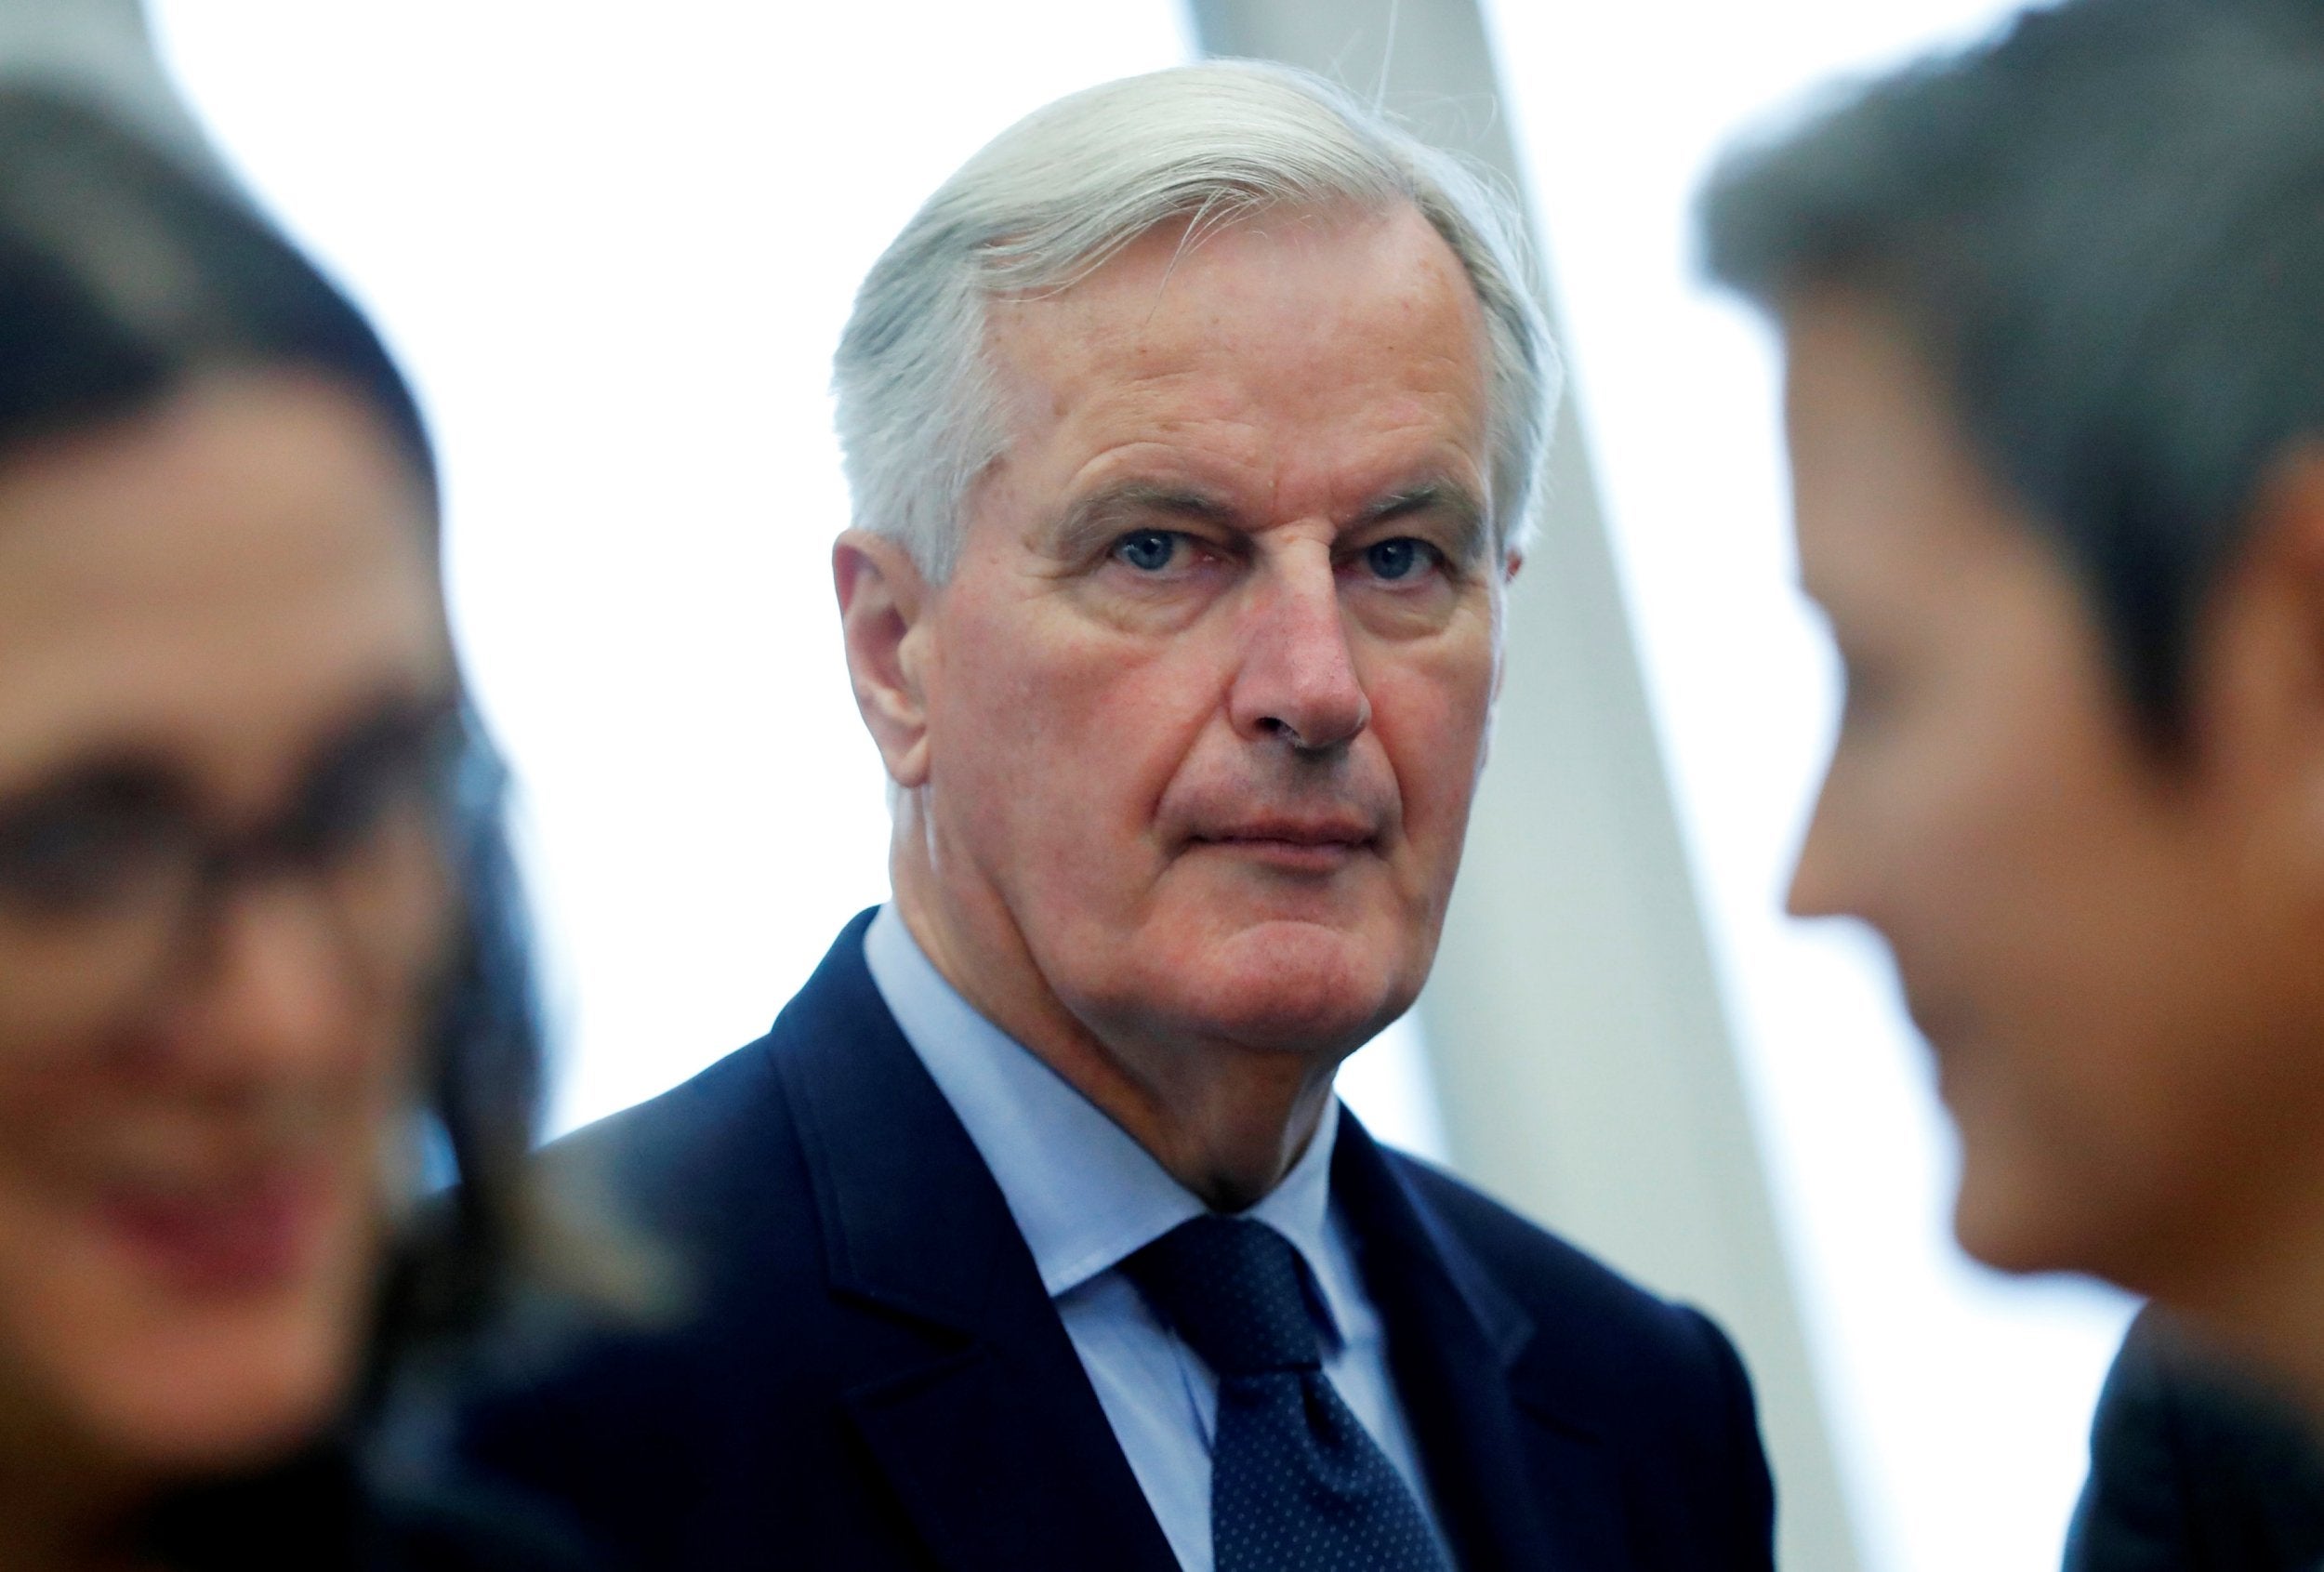 The EU’s former chief negotiator Michel Barnier